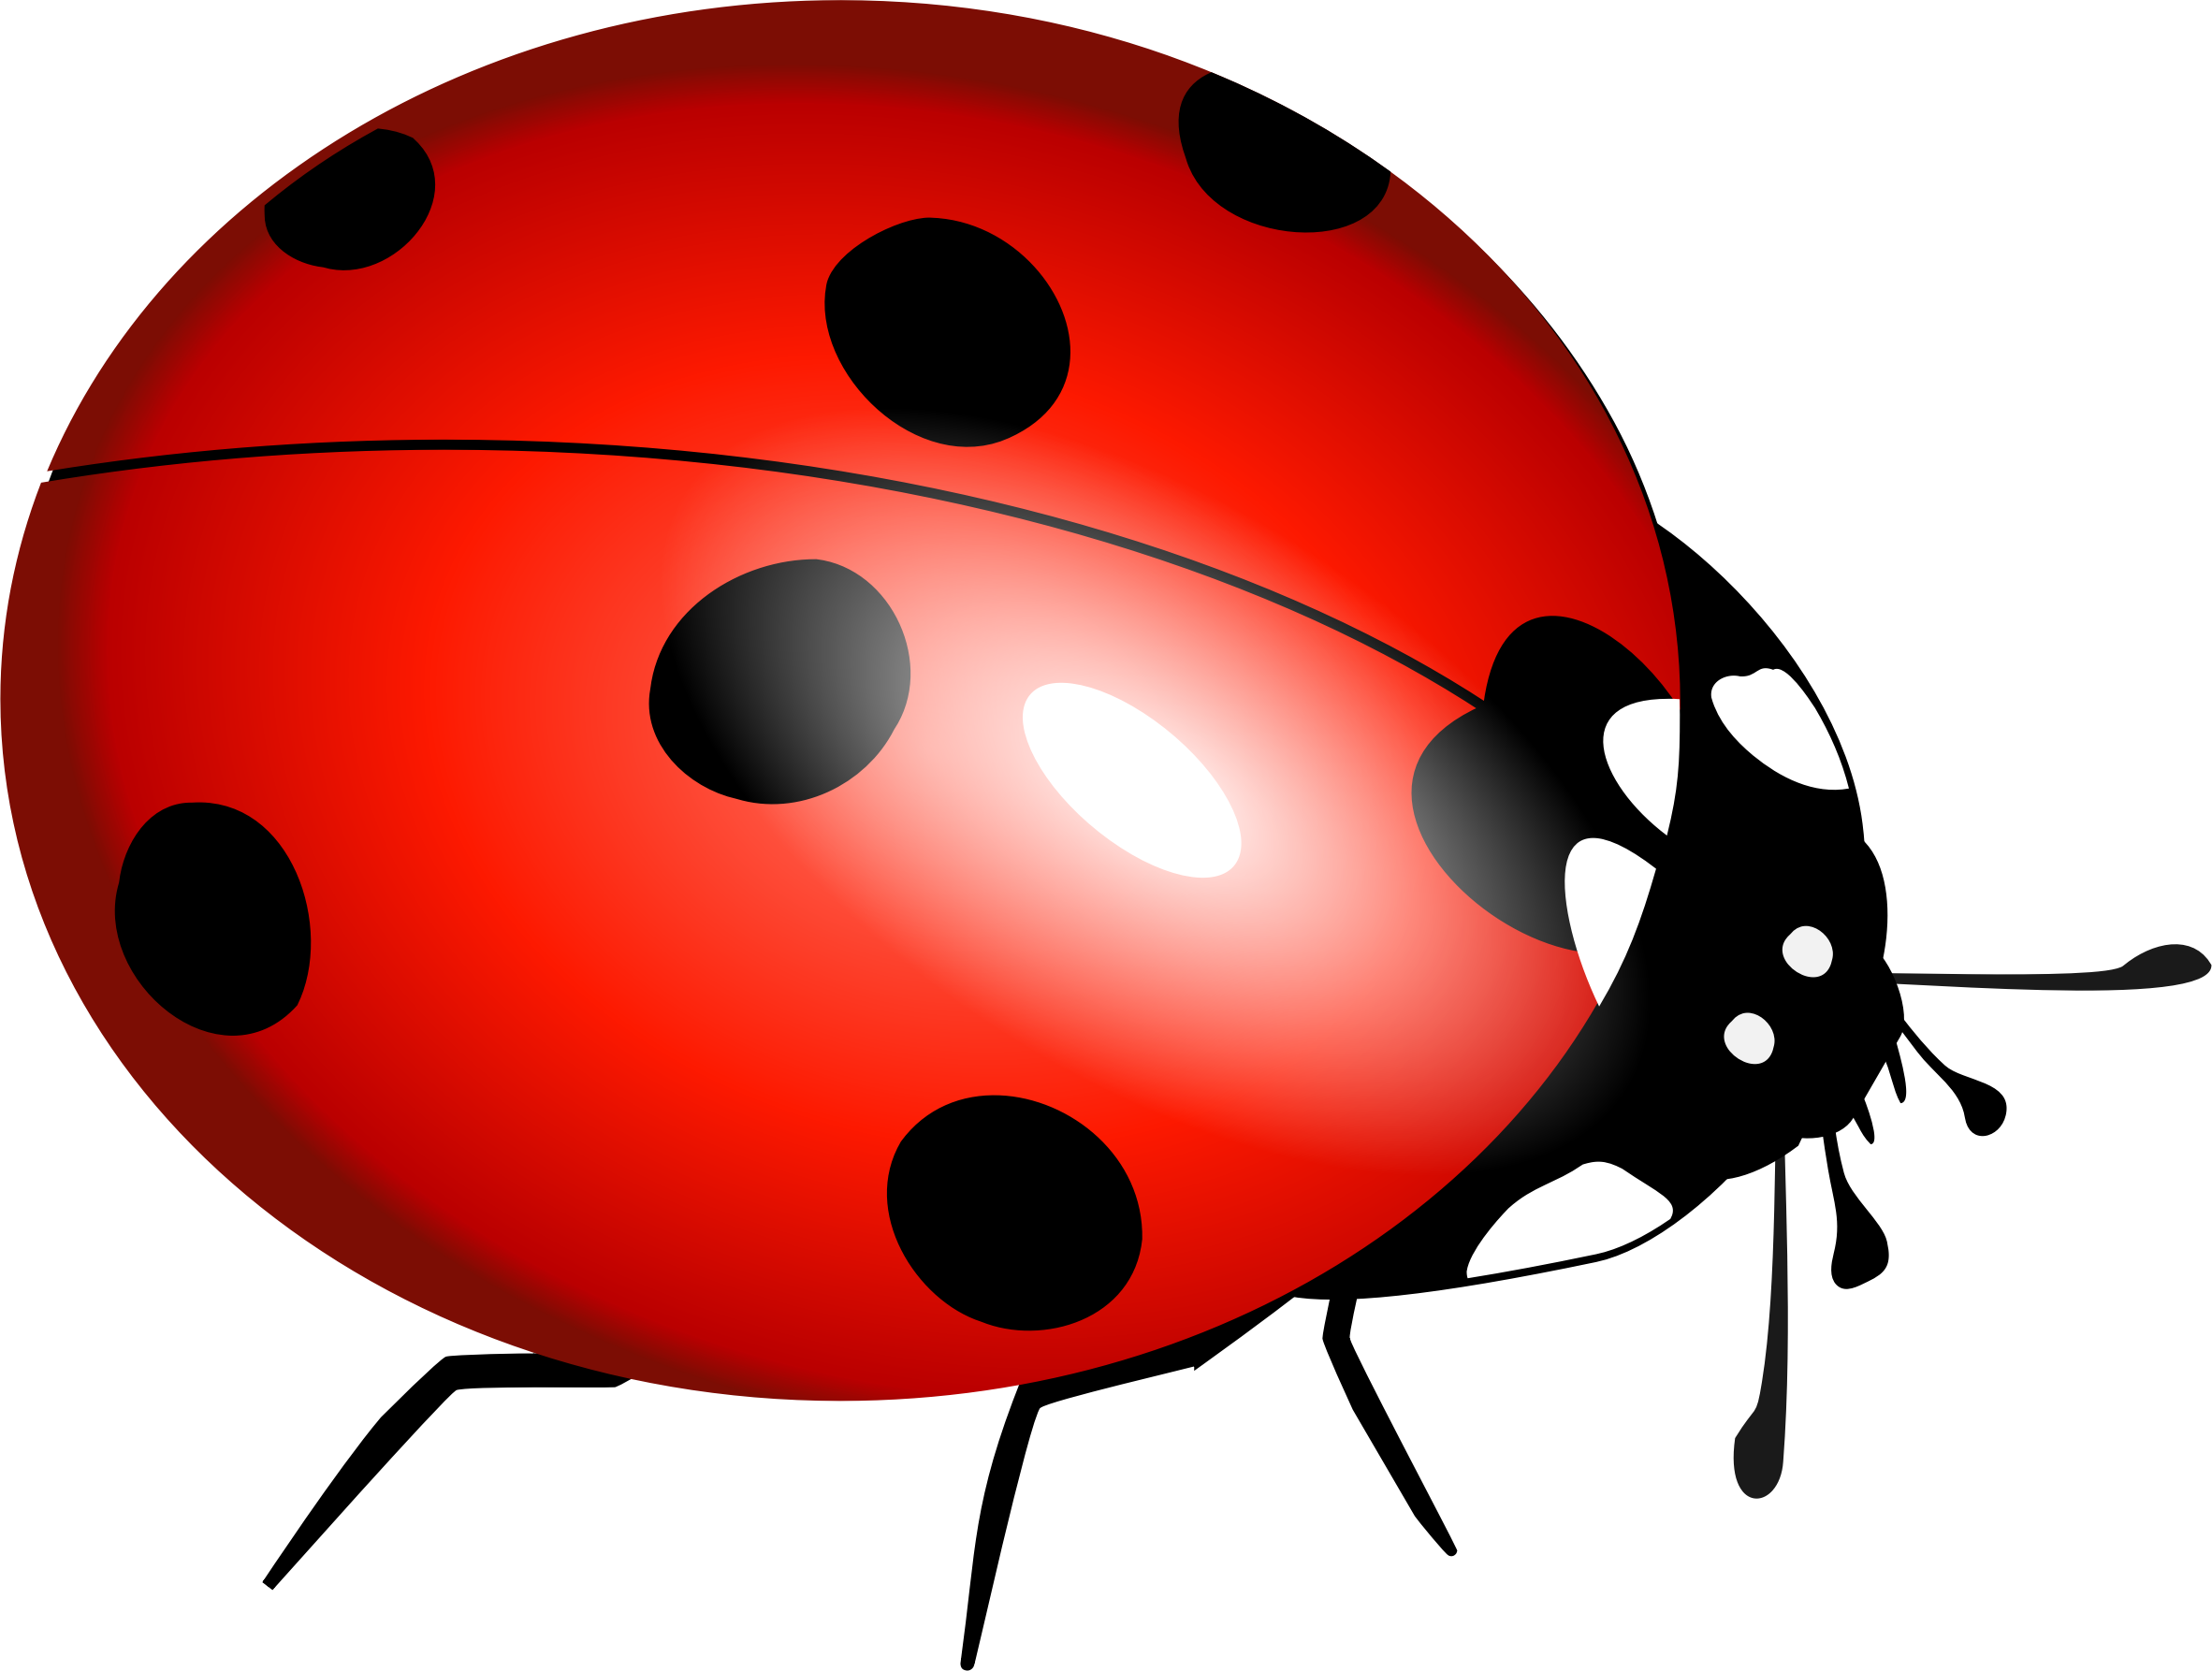 Download Ladybug Vector File image - Free stock photo - Public Domain photo - CC0 Images